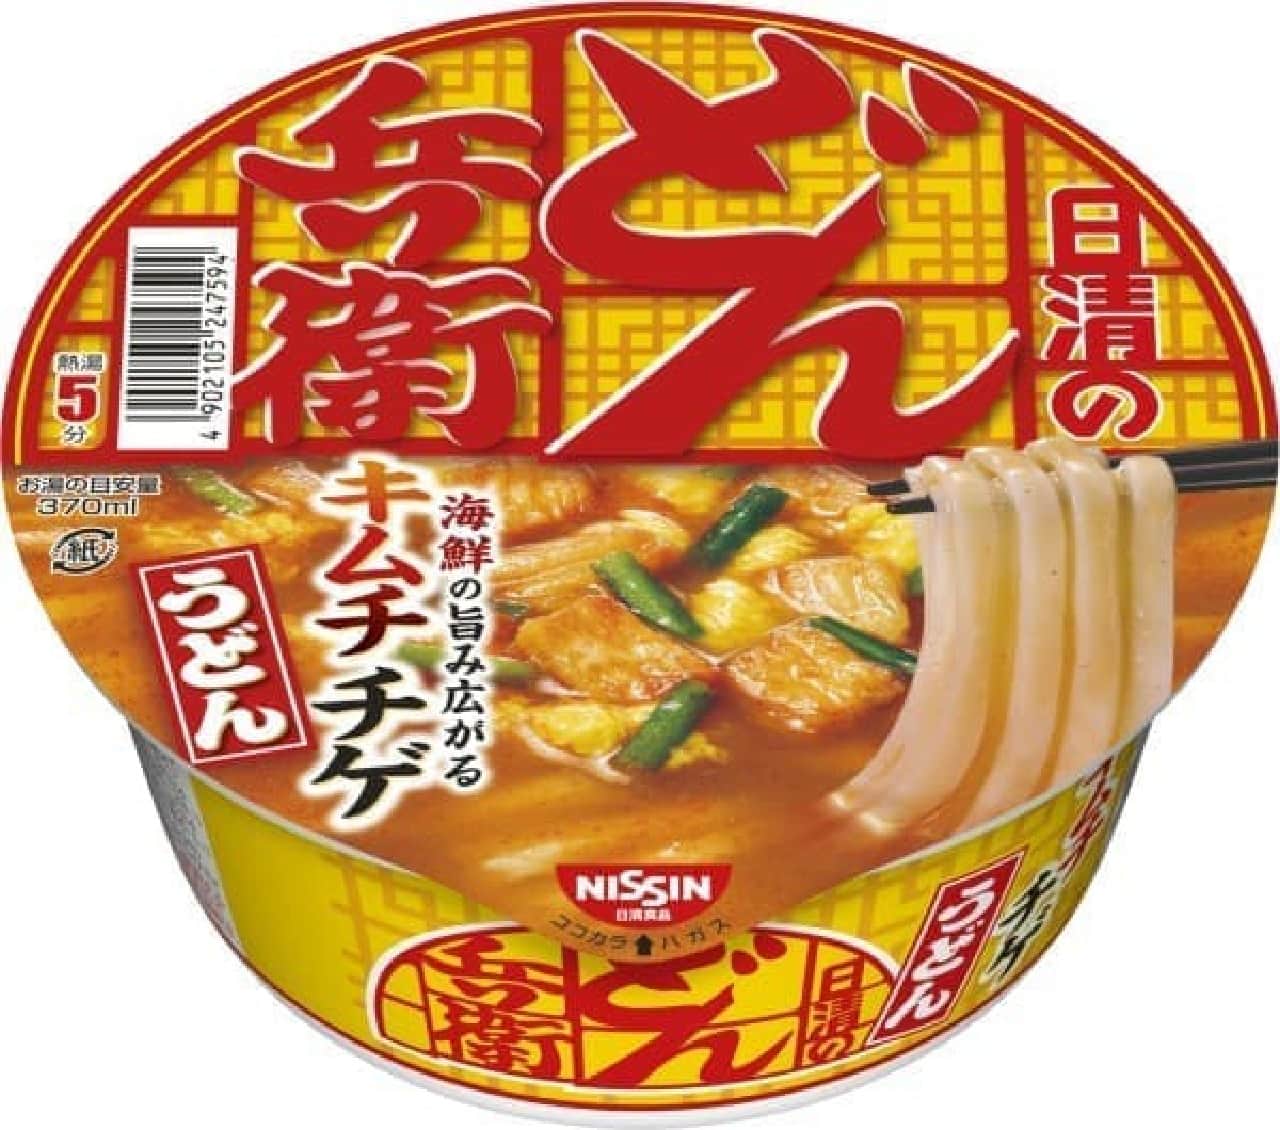 Nissin Foods "Nissin Donbei Kimchichige Udon"